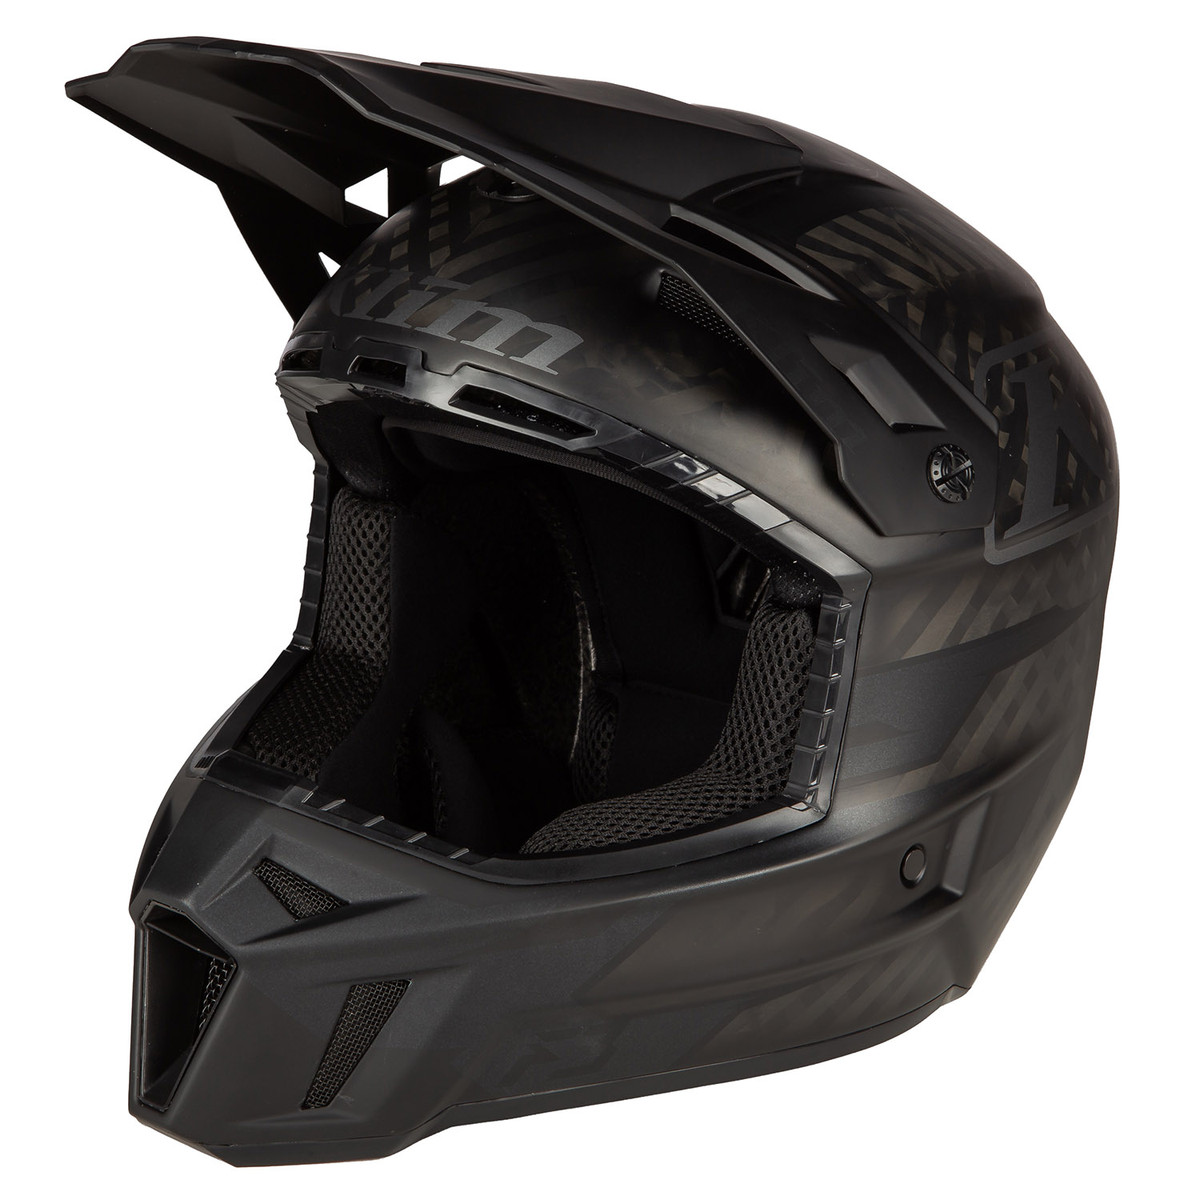 Klim F3 Carbon is the lightest dirt bike helmet on the market